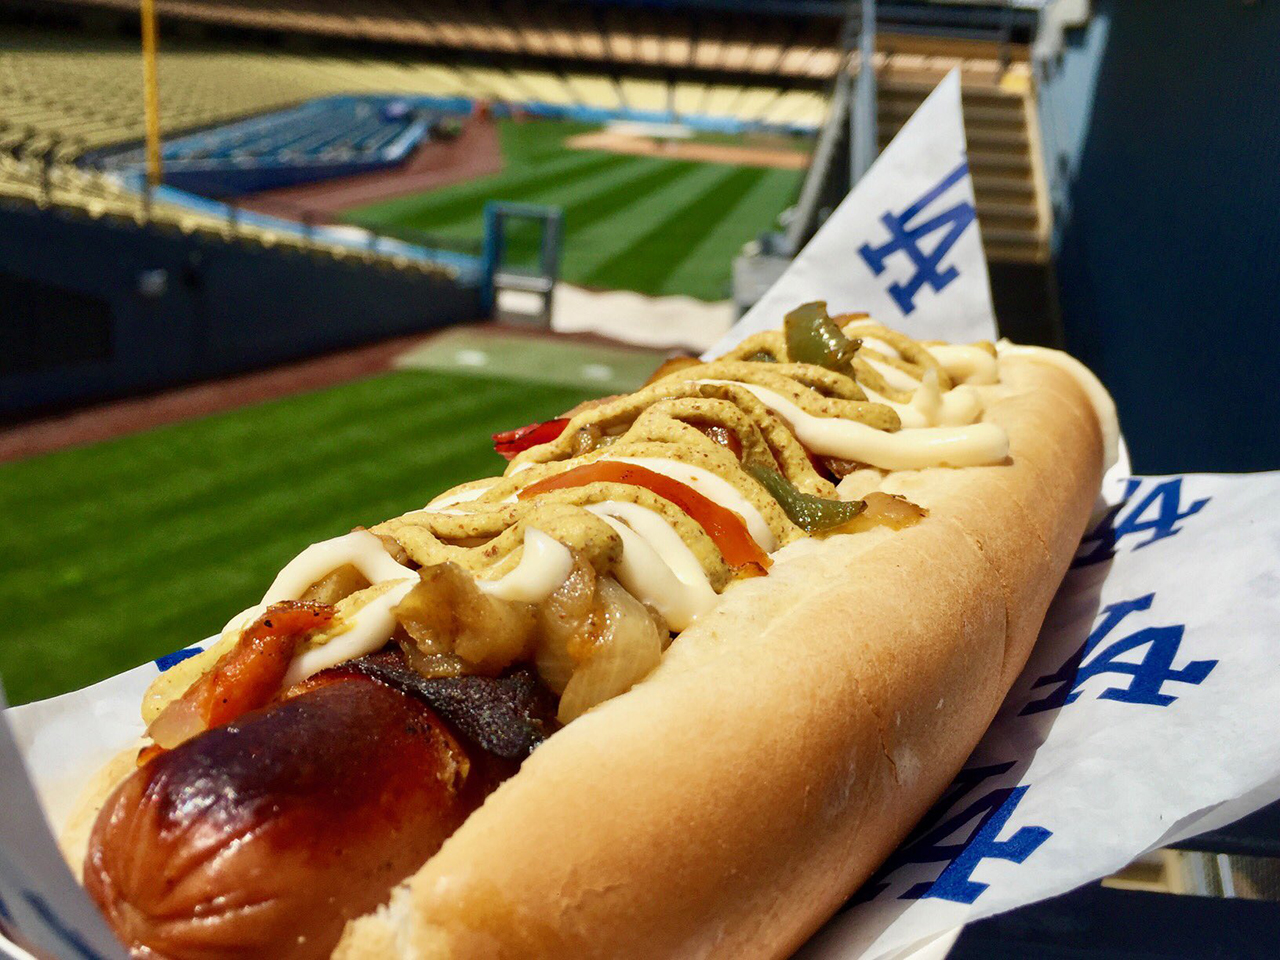 Wow sejr bold Celebrate Hot Dog History at the Ballpark | Ballpark Digest